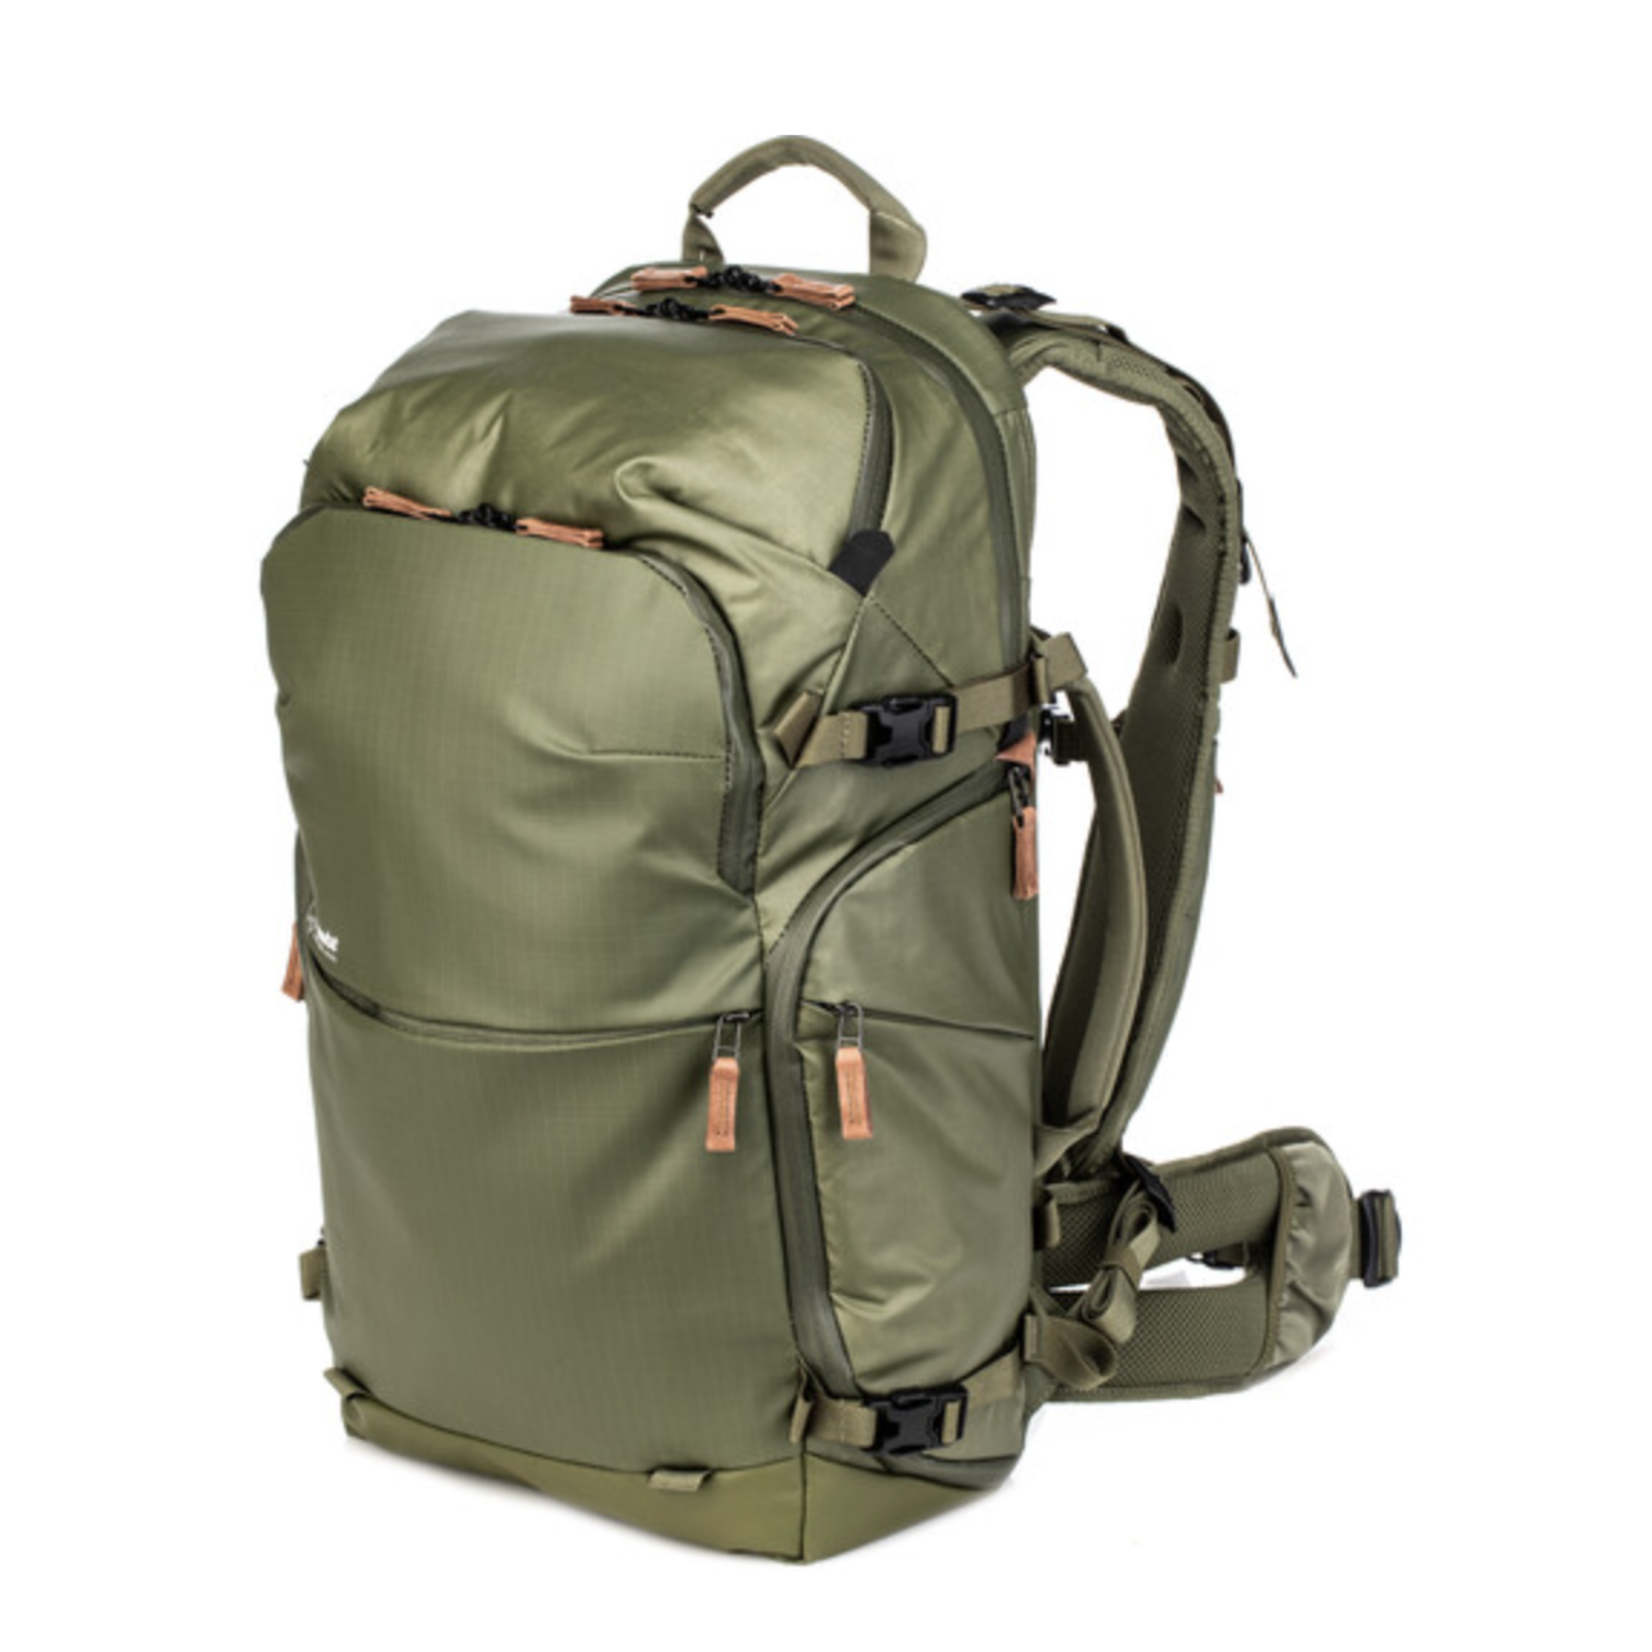 Shimoda Shimoda Designs Explore v2 30 Backpack Photo Starter Kit (Army Green)